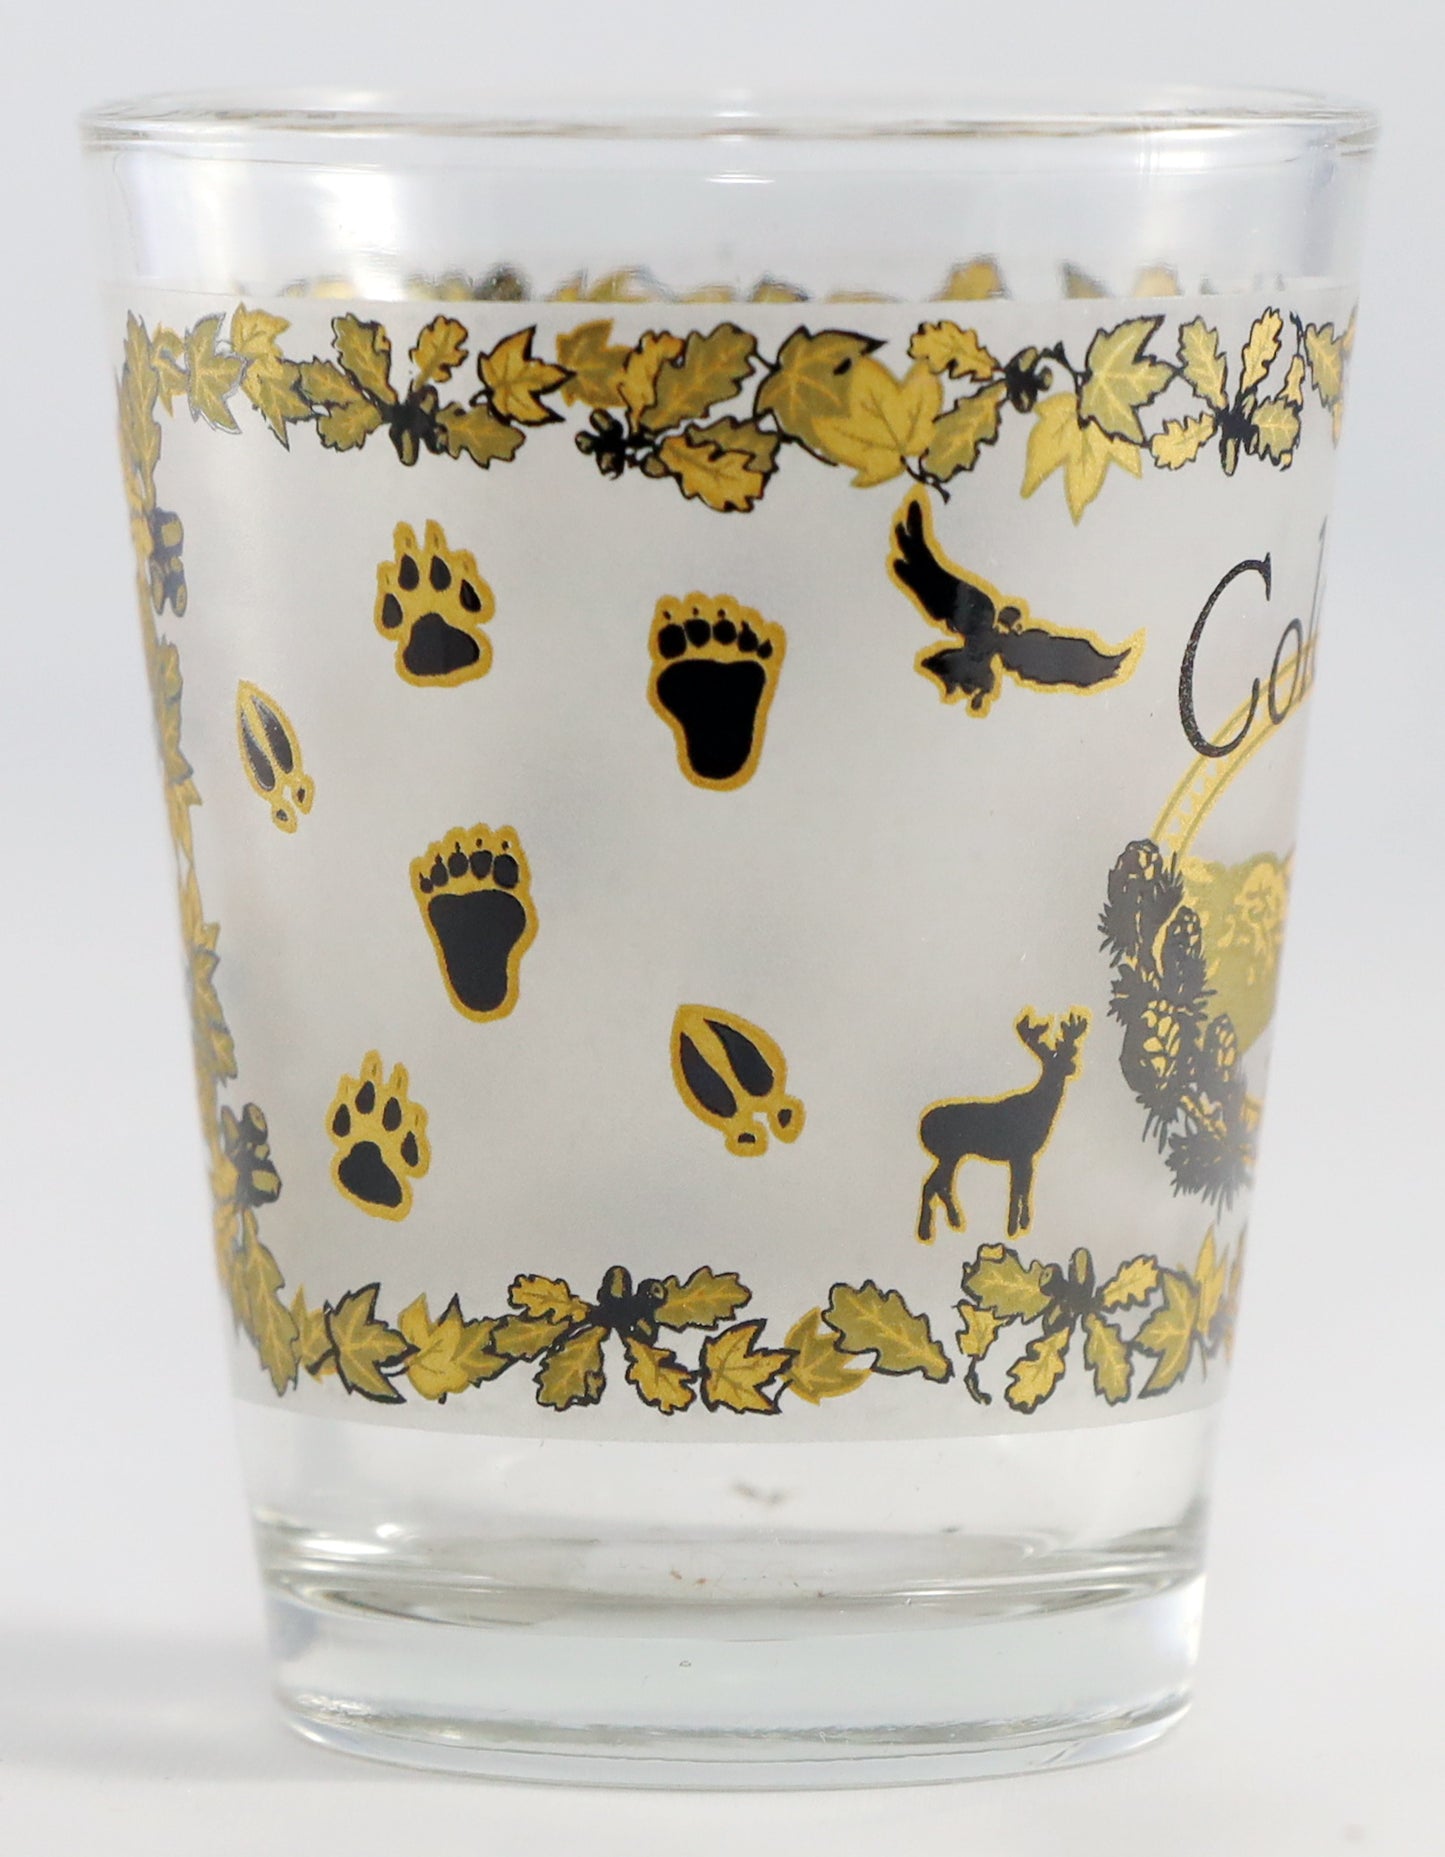 Colorado Wildlife w/ Gold and Black Shot Glass